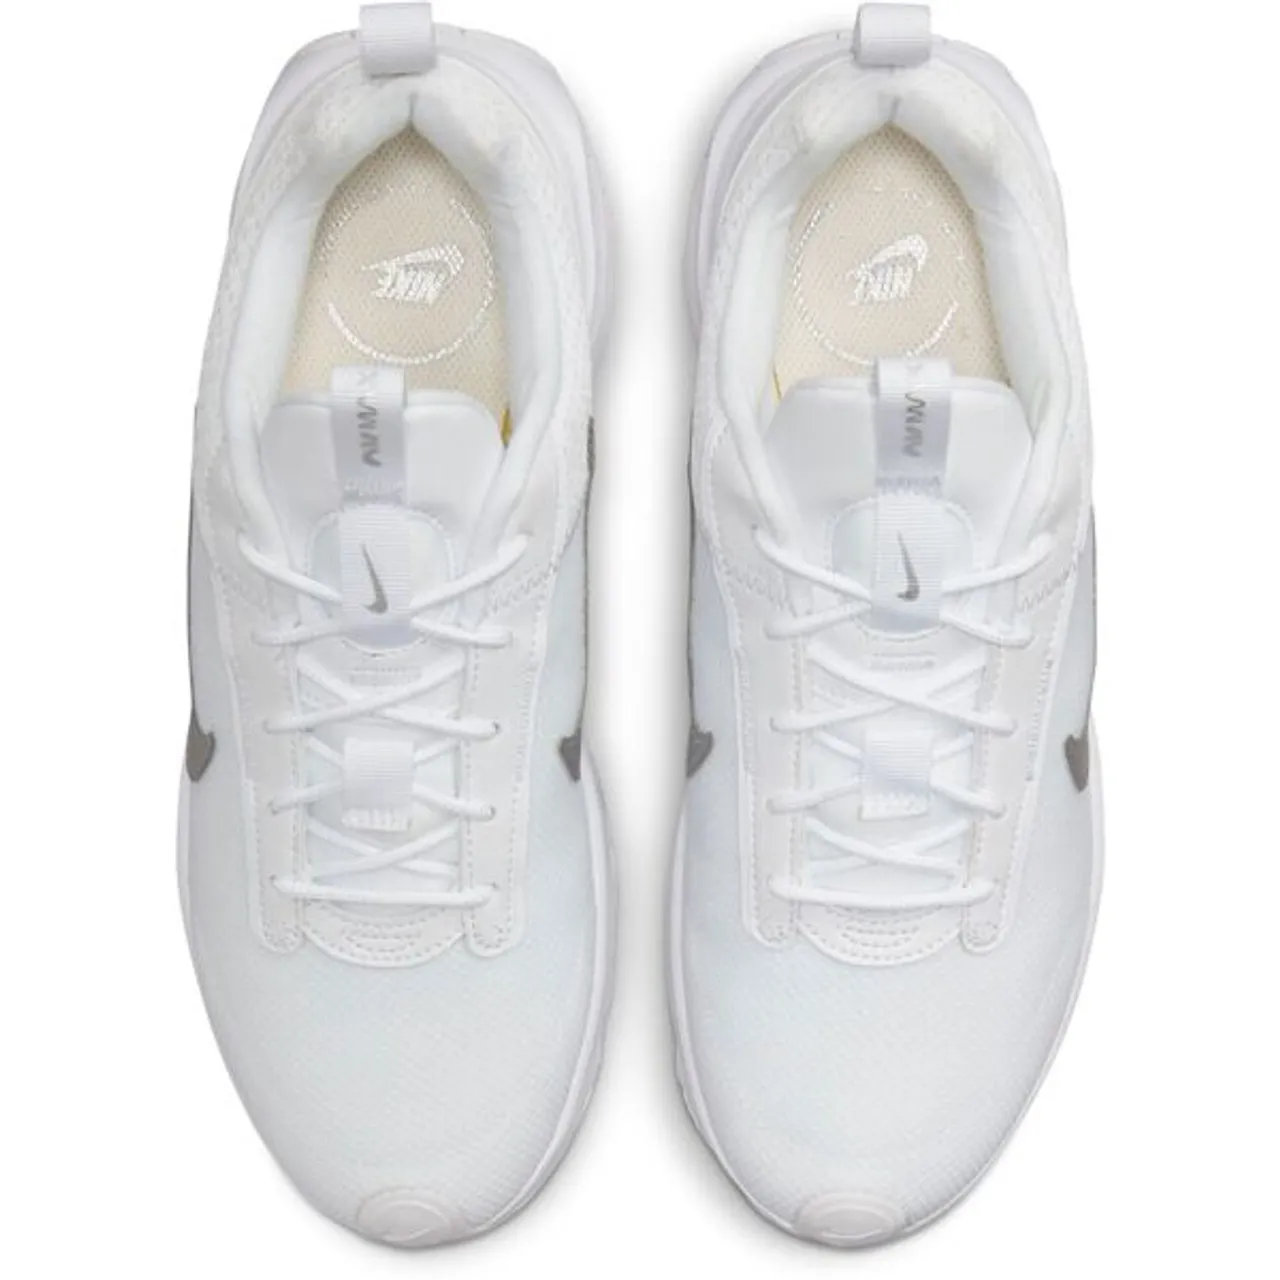 Sneaker NIKE SPORTSWEAR "AIR MAX INTRLK LITE" Gr. 39, weiß (white, metallic, silver, white) Schuhe Sneaker